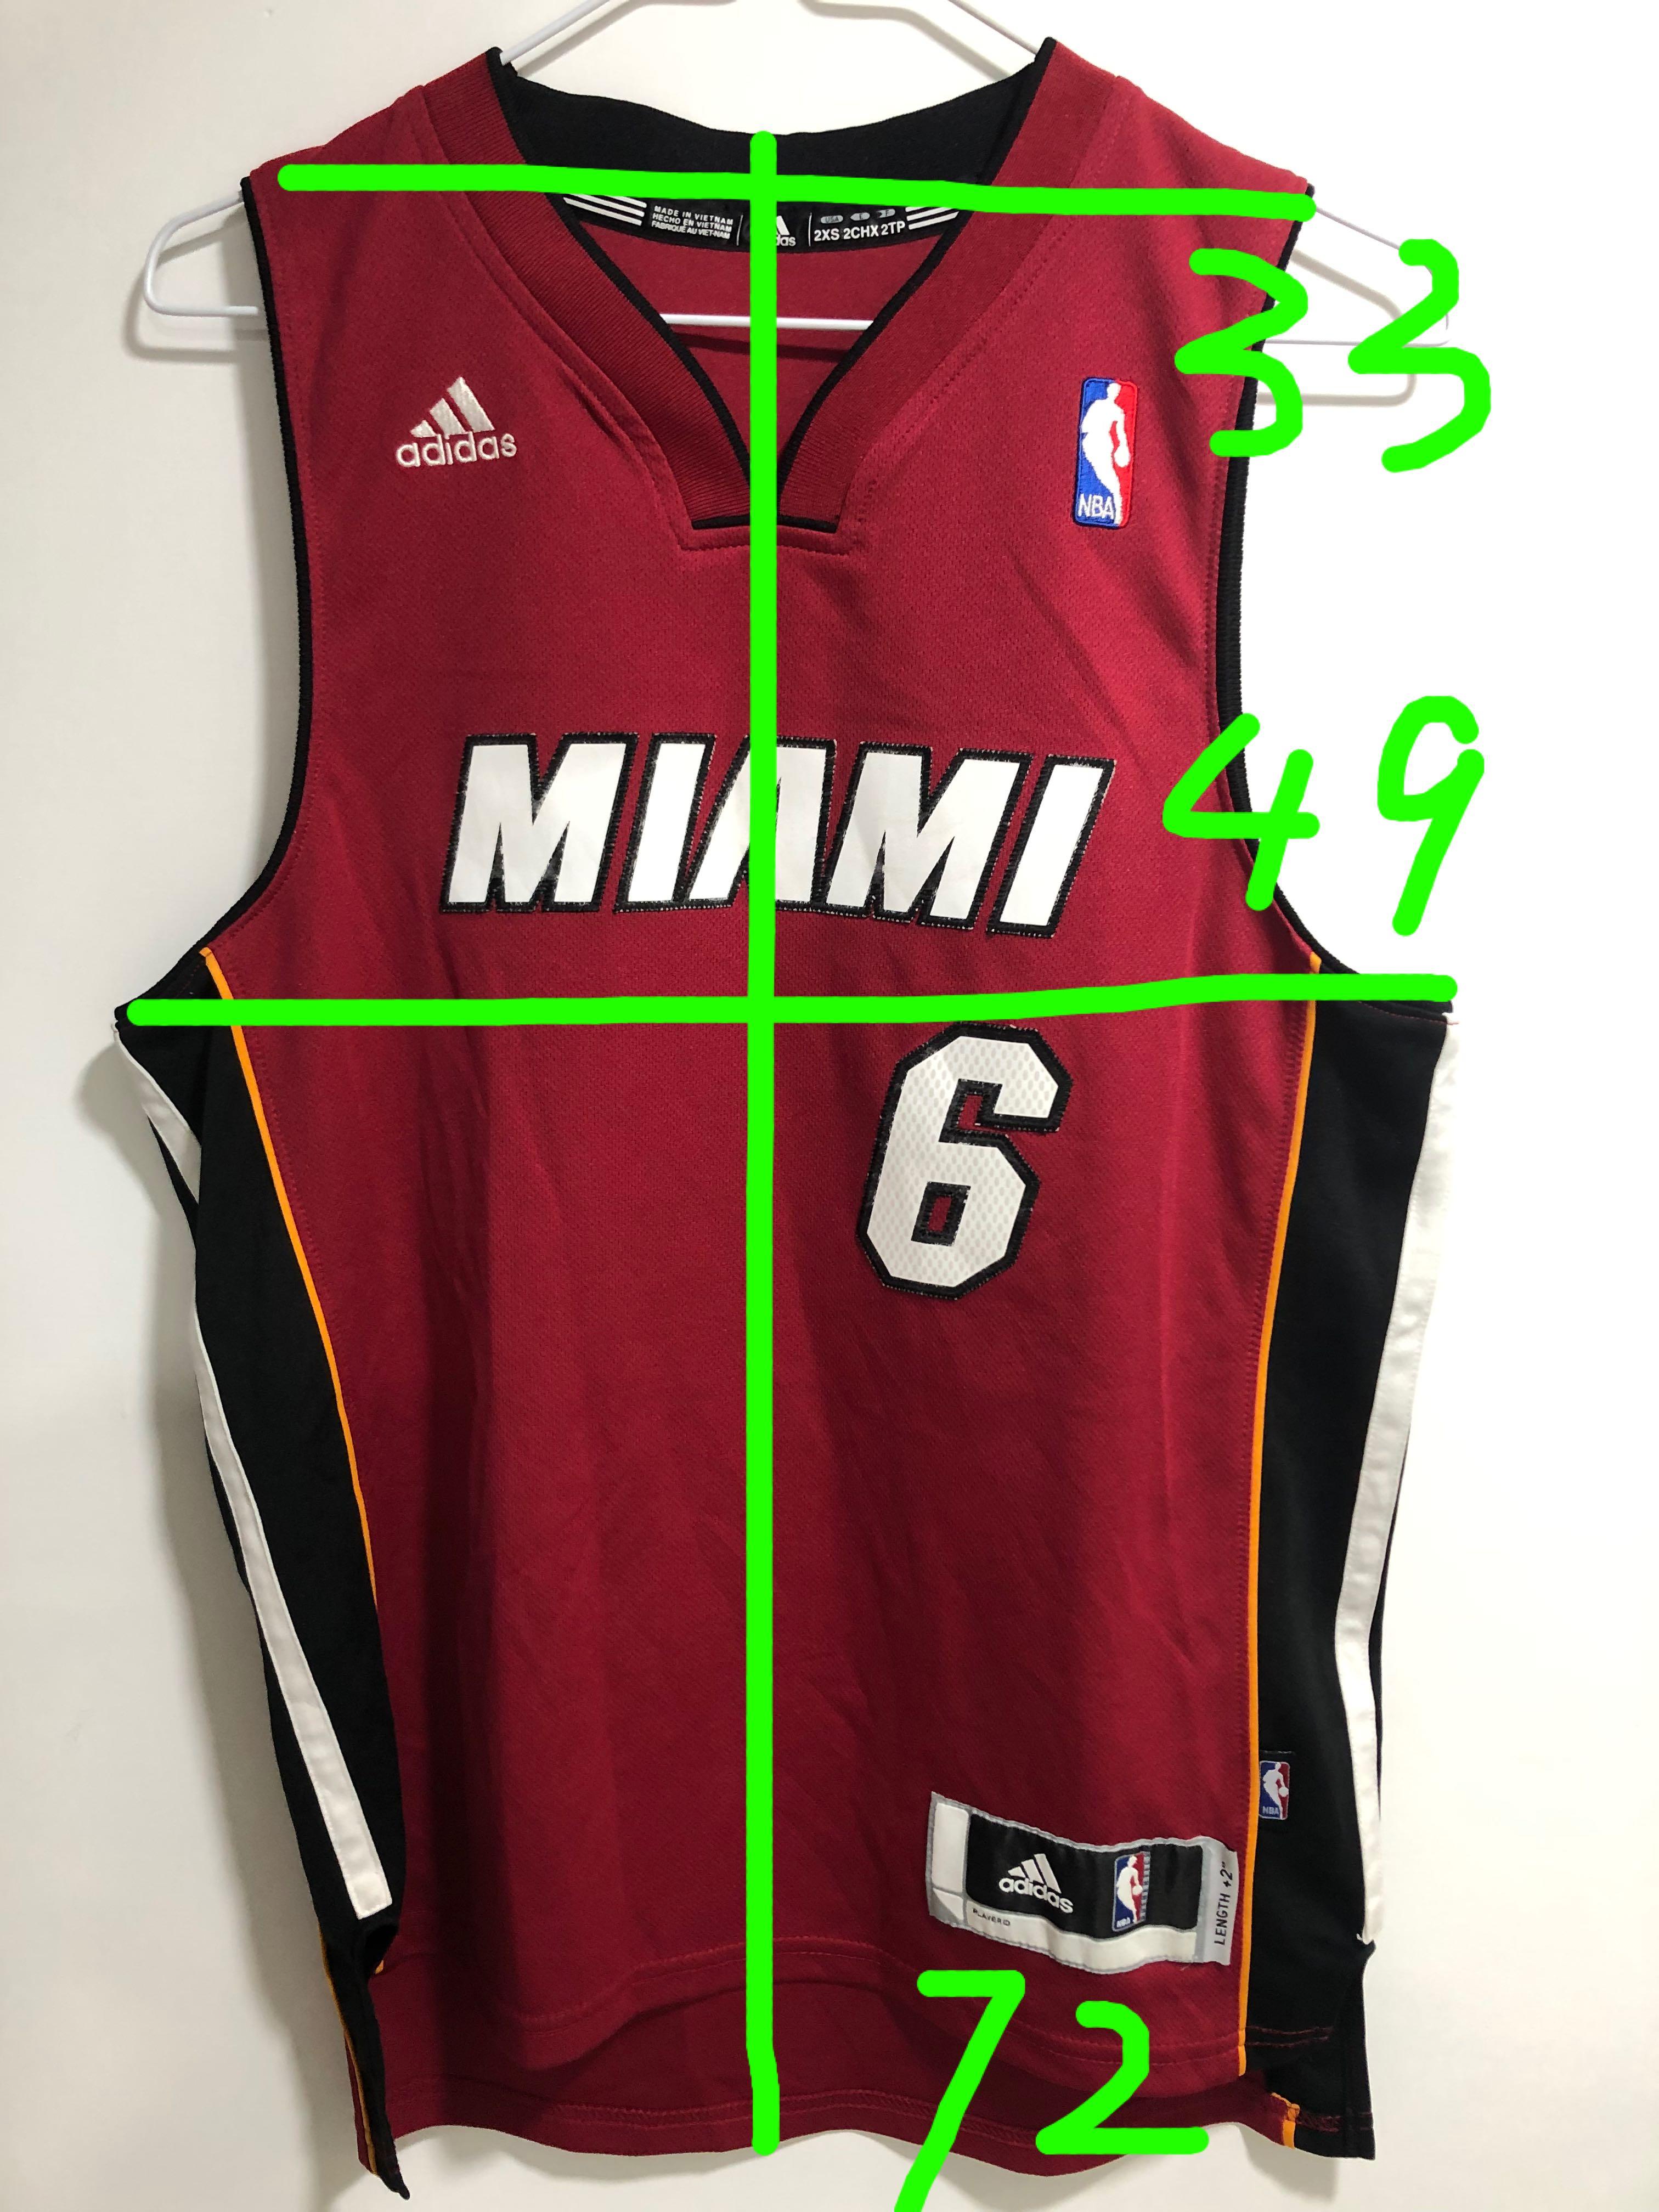 Adidas LeBron James Miami Heat Authentic Jersey Red Black Men's Size 52